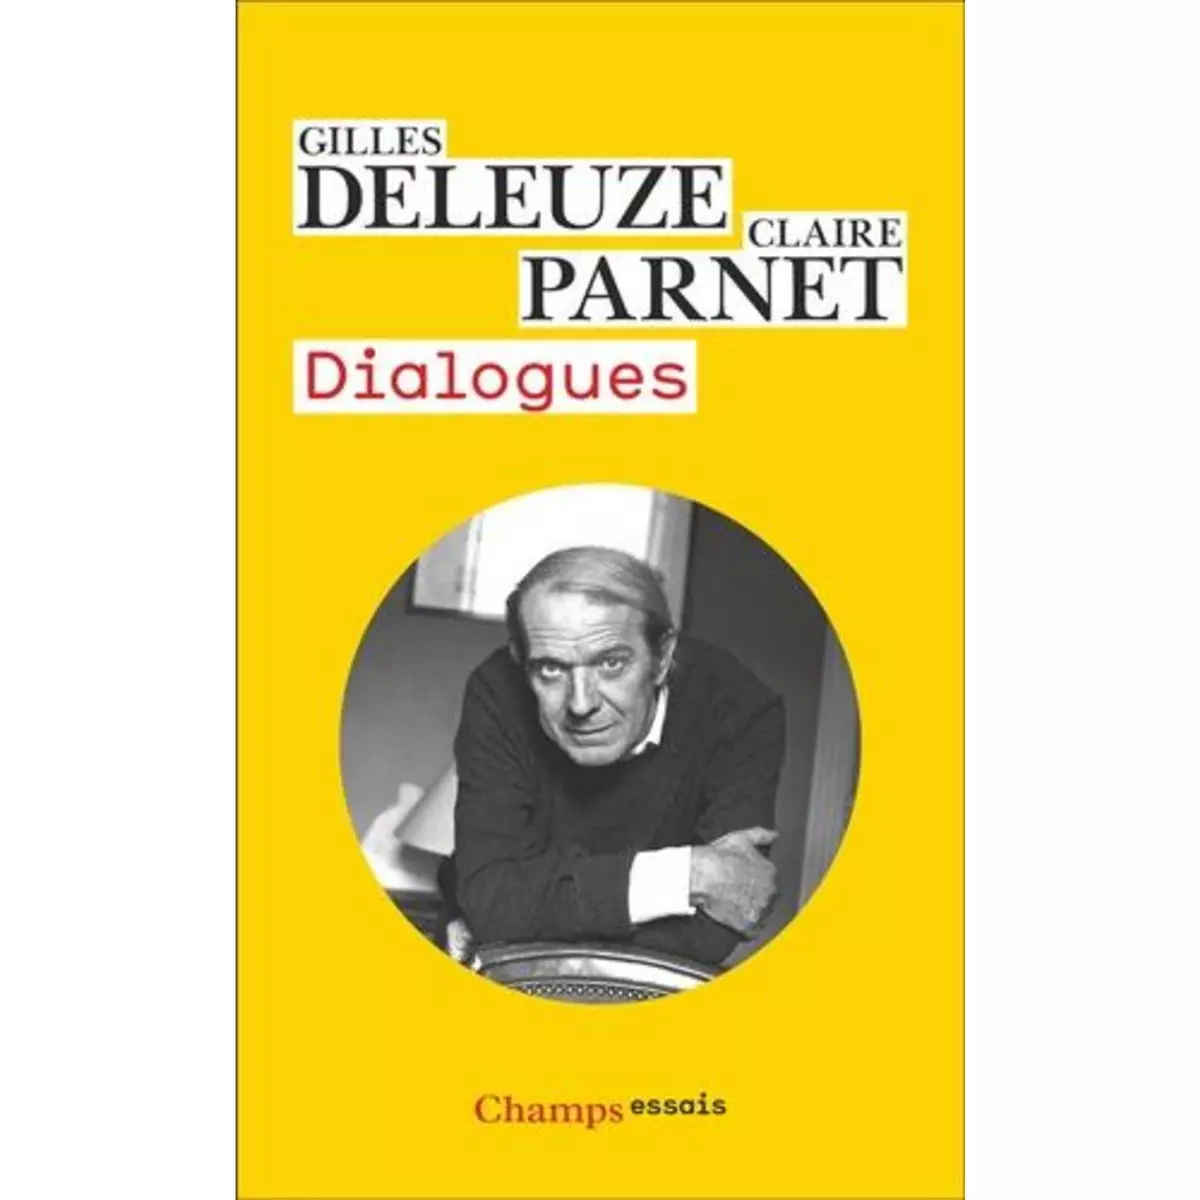  DIALOGUES, Deleuze Gilles